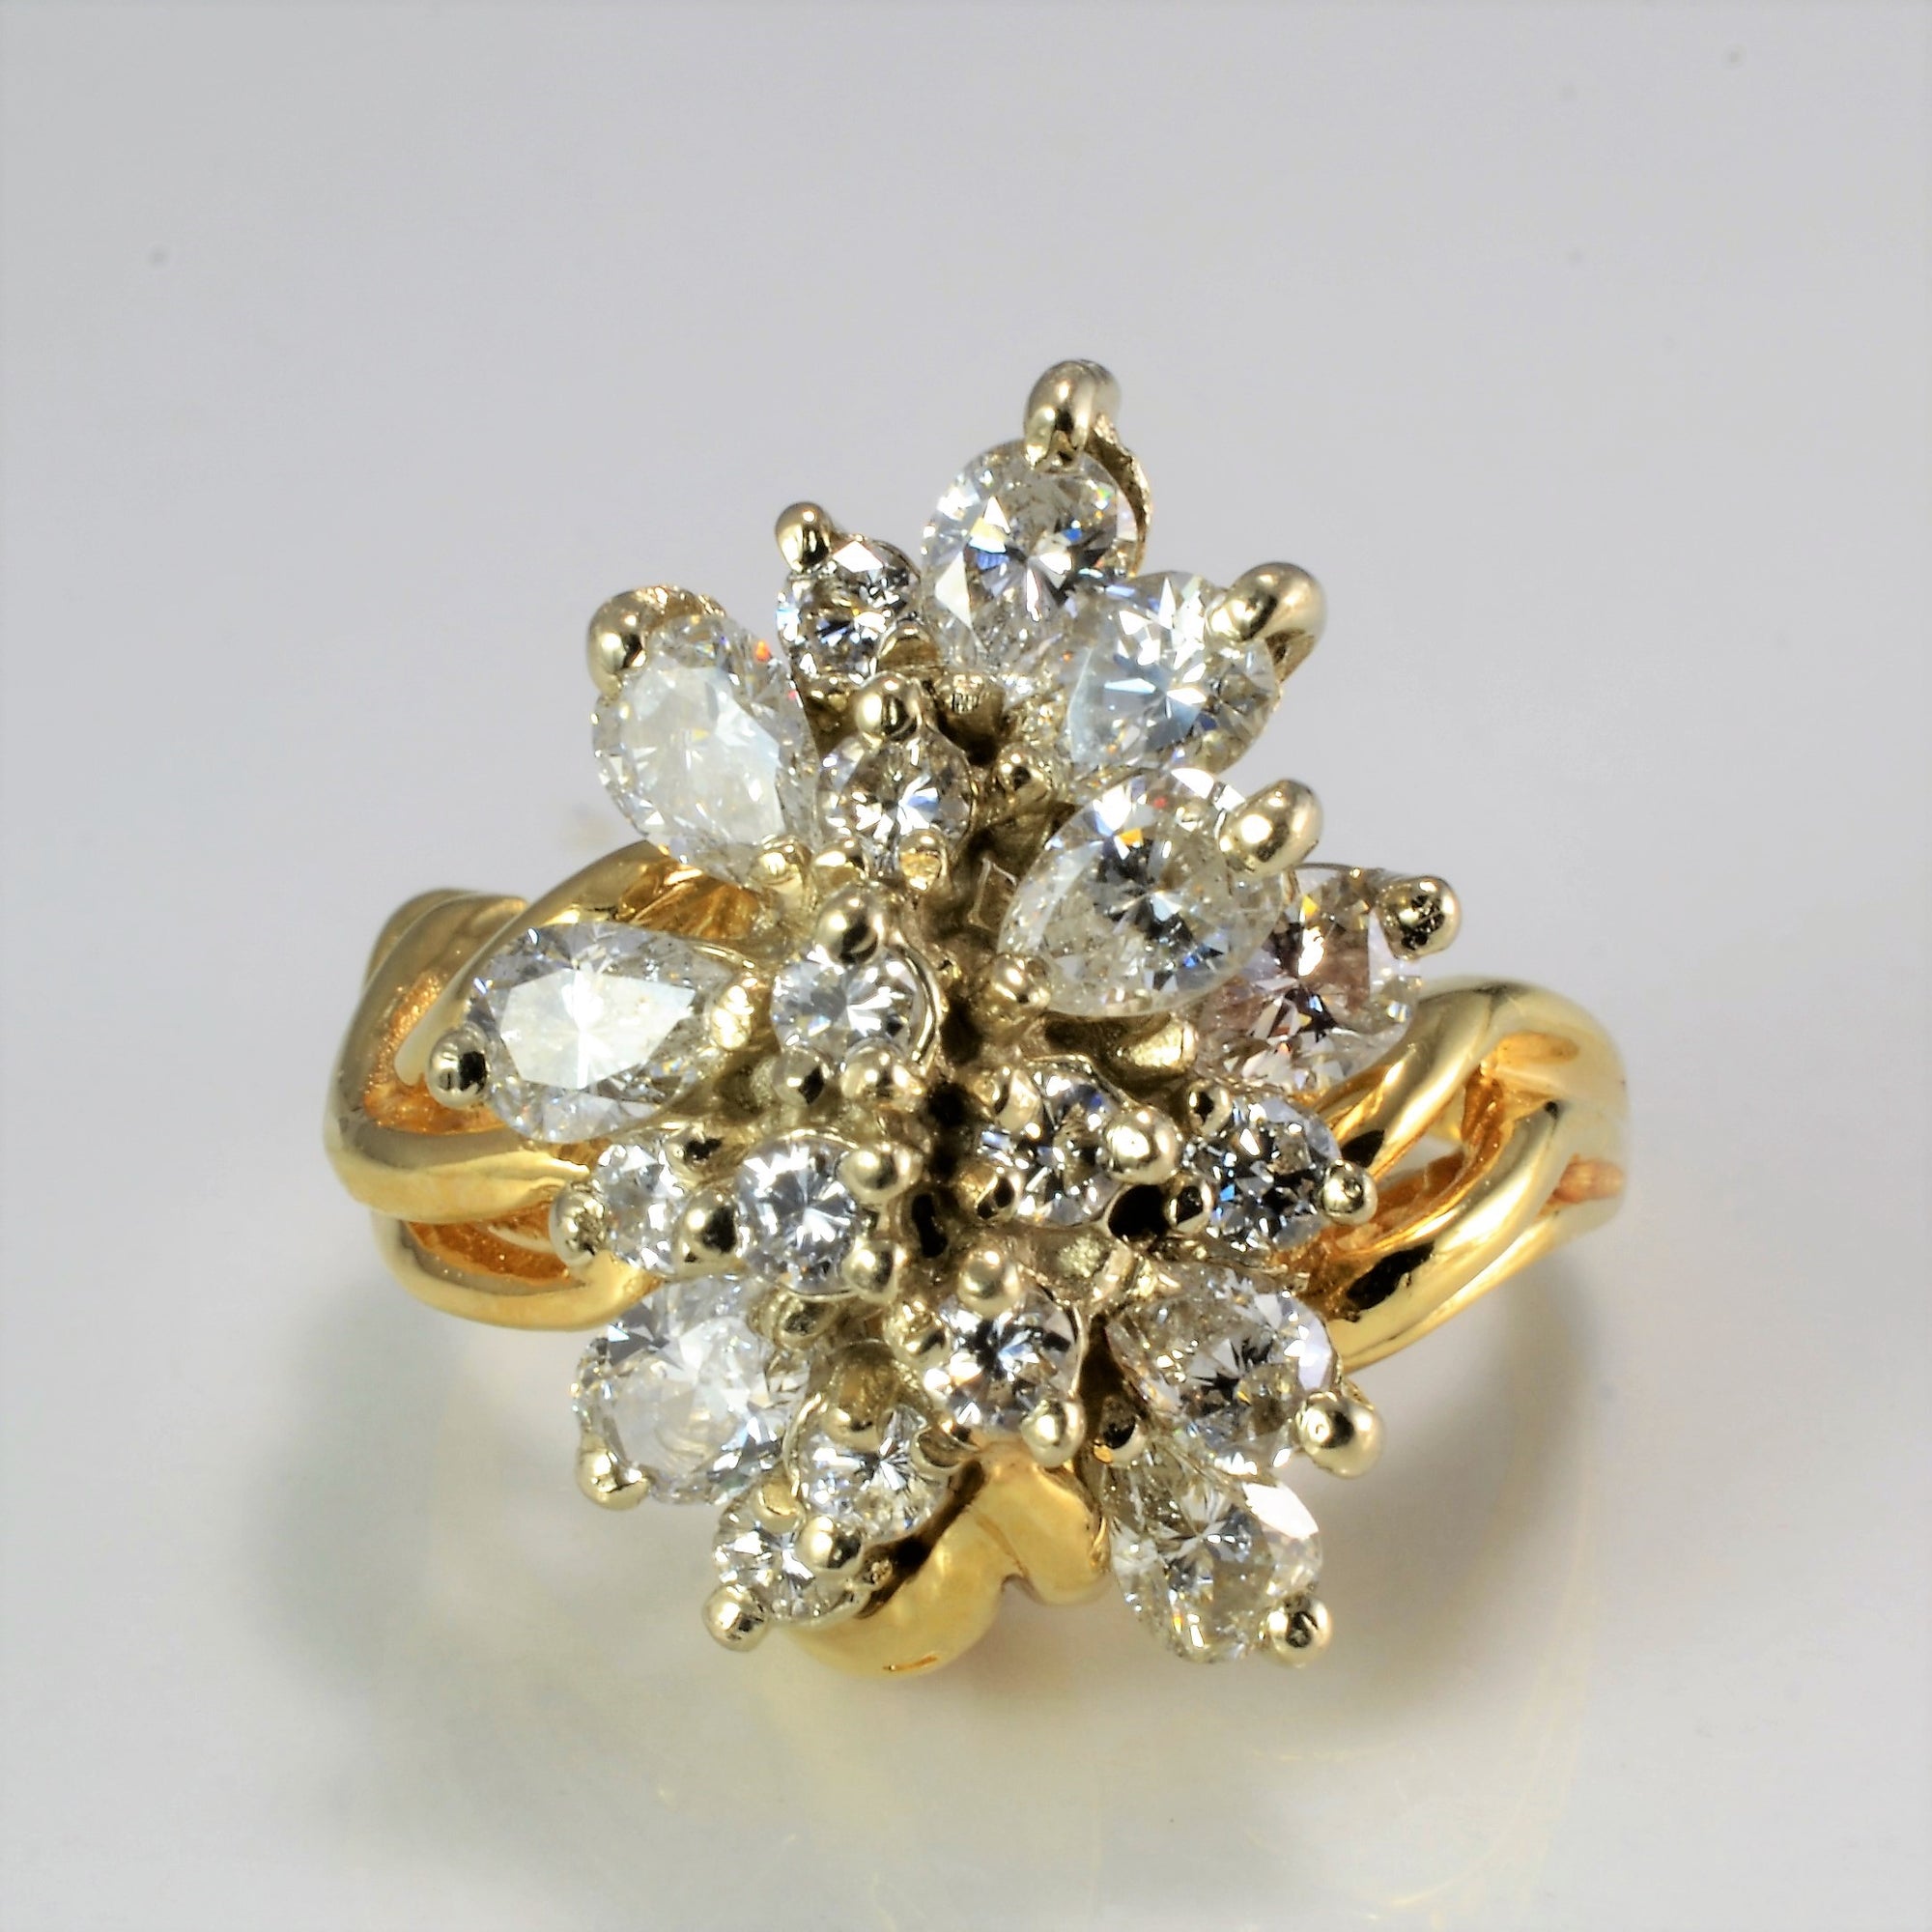 High Set Cluster Diamond Ladies Ring | 1.43 ctw, SZ 5 |